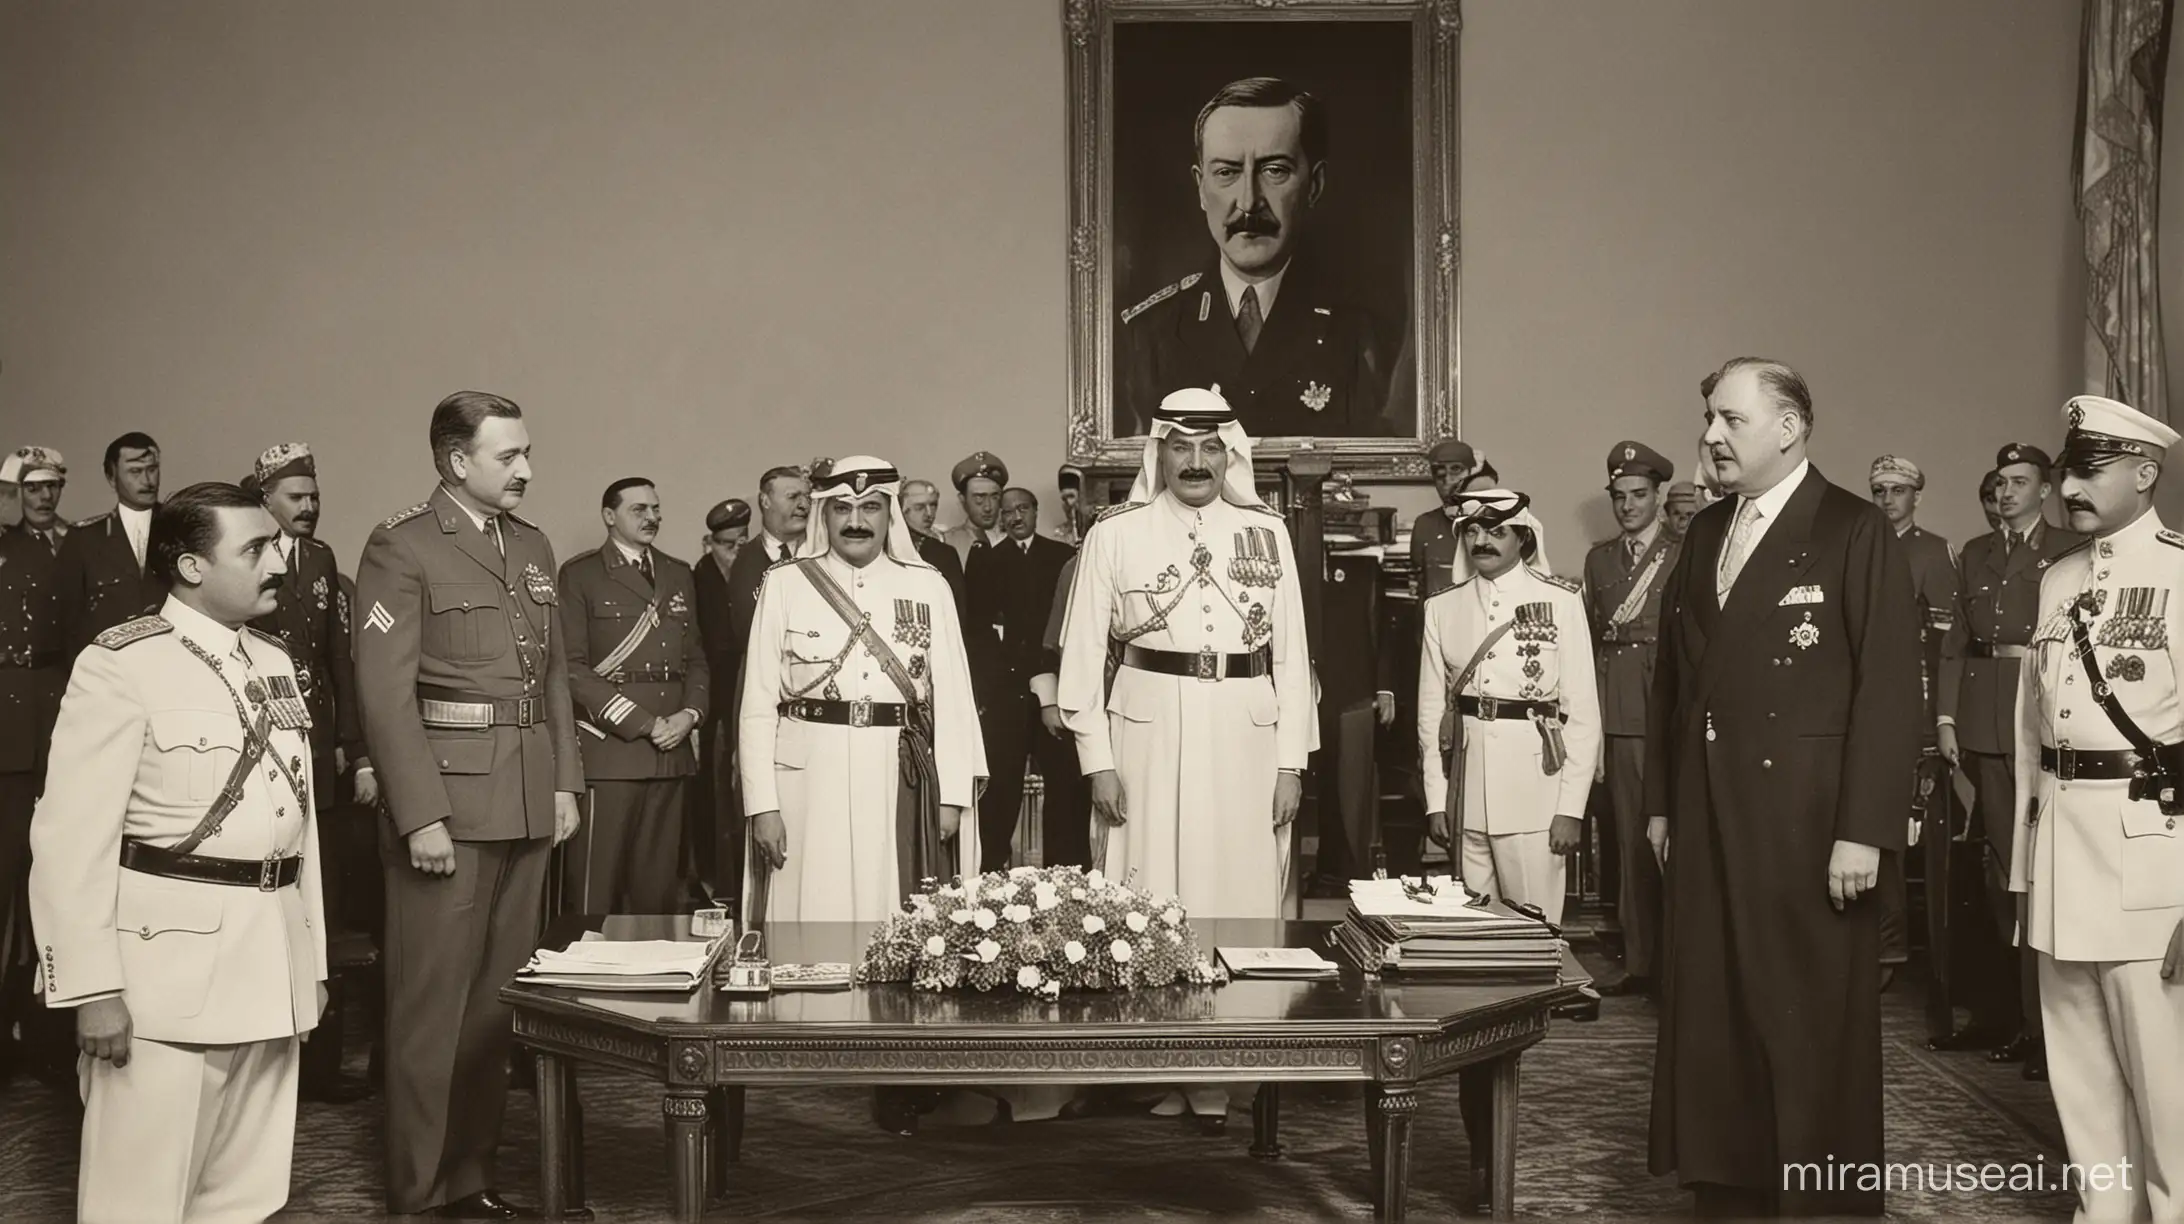 Historic Meeting Romanian King and Saudi Arabian Prince in Luxurious Hall